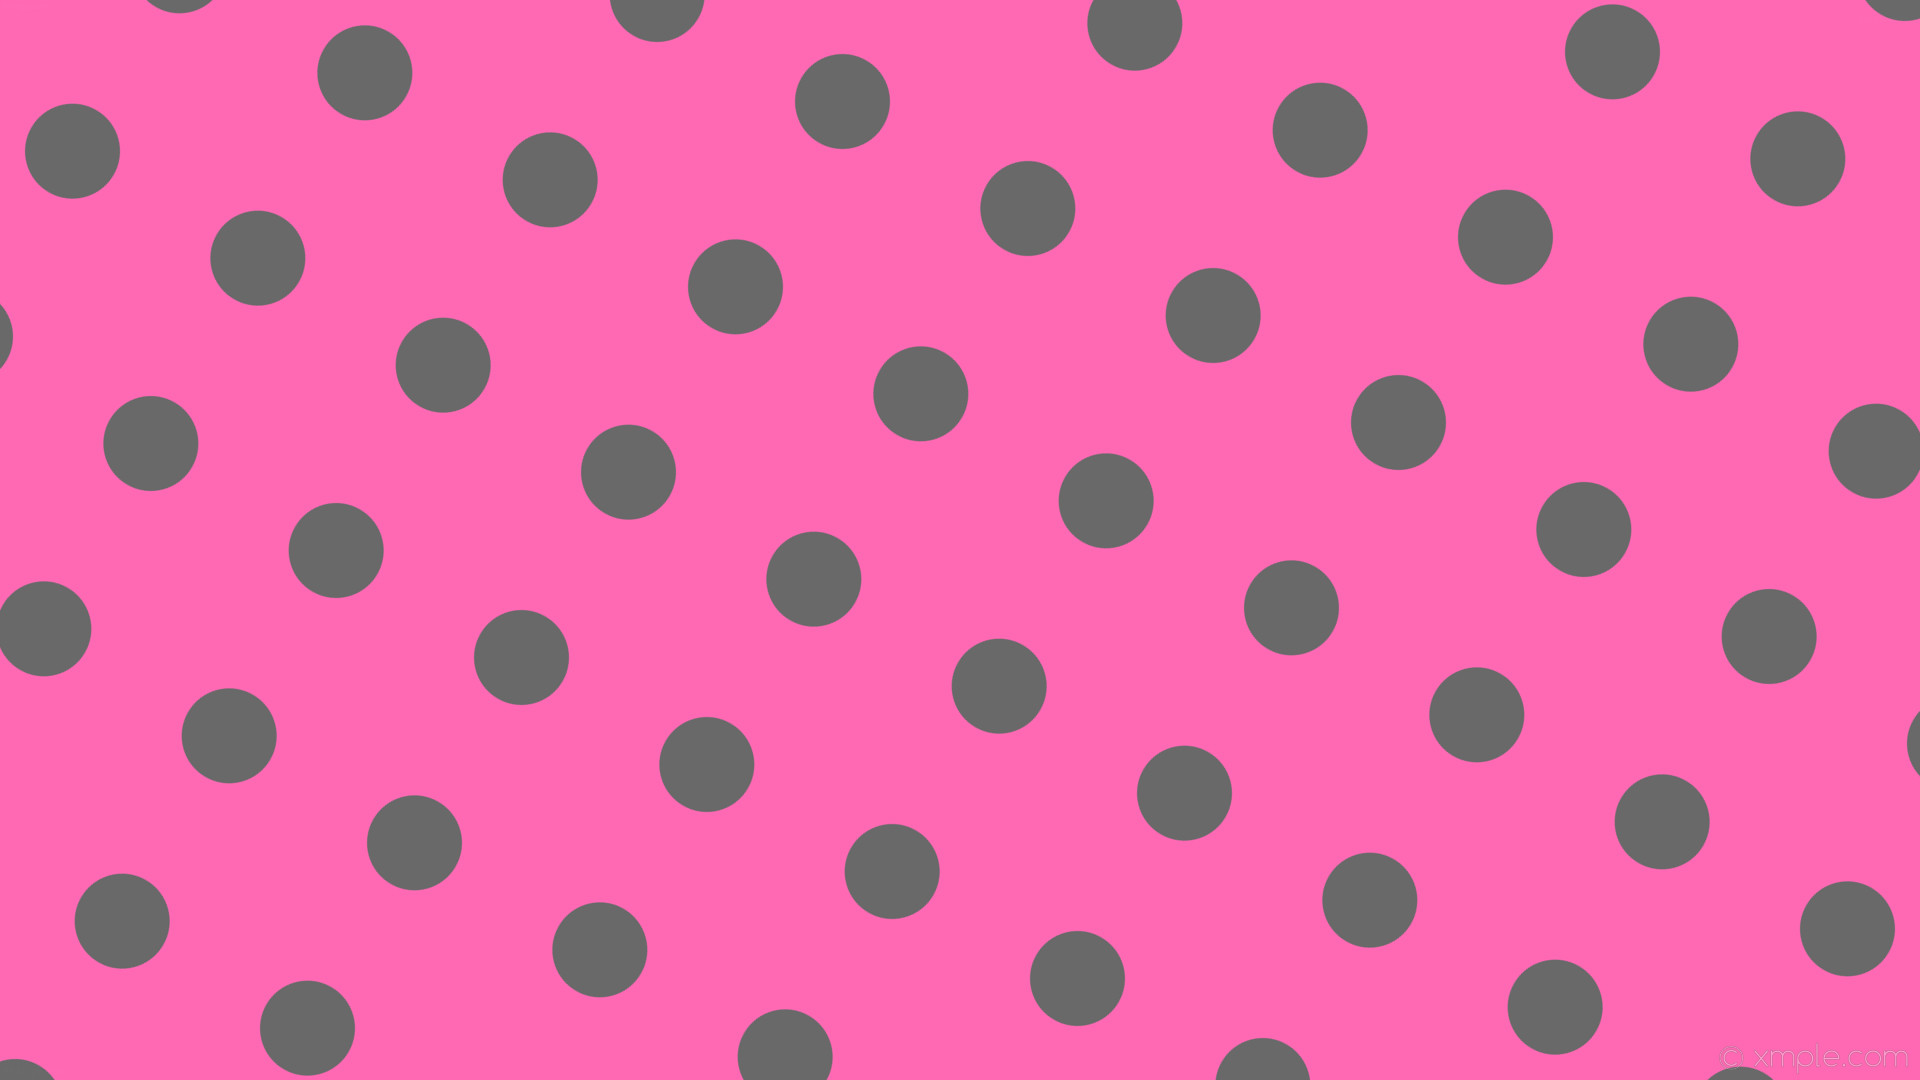 1920x1080 wallpaper polka dots grey pink spots hot pink dim gray #ff69b4 #696969 150Â°